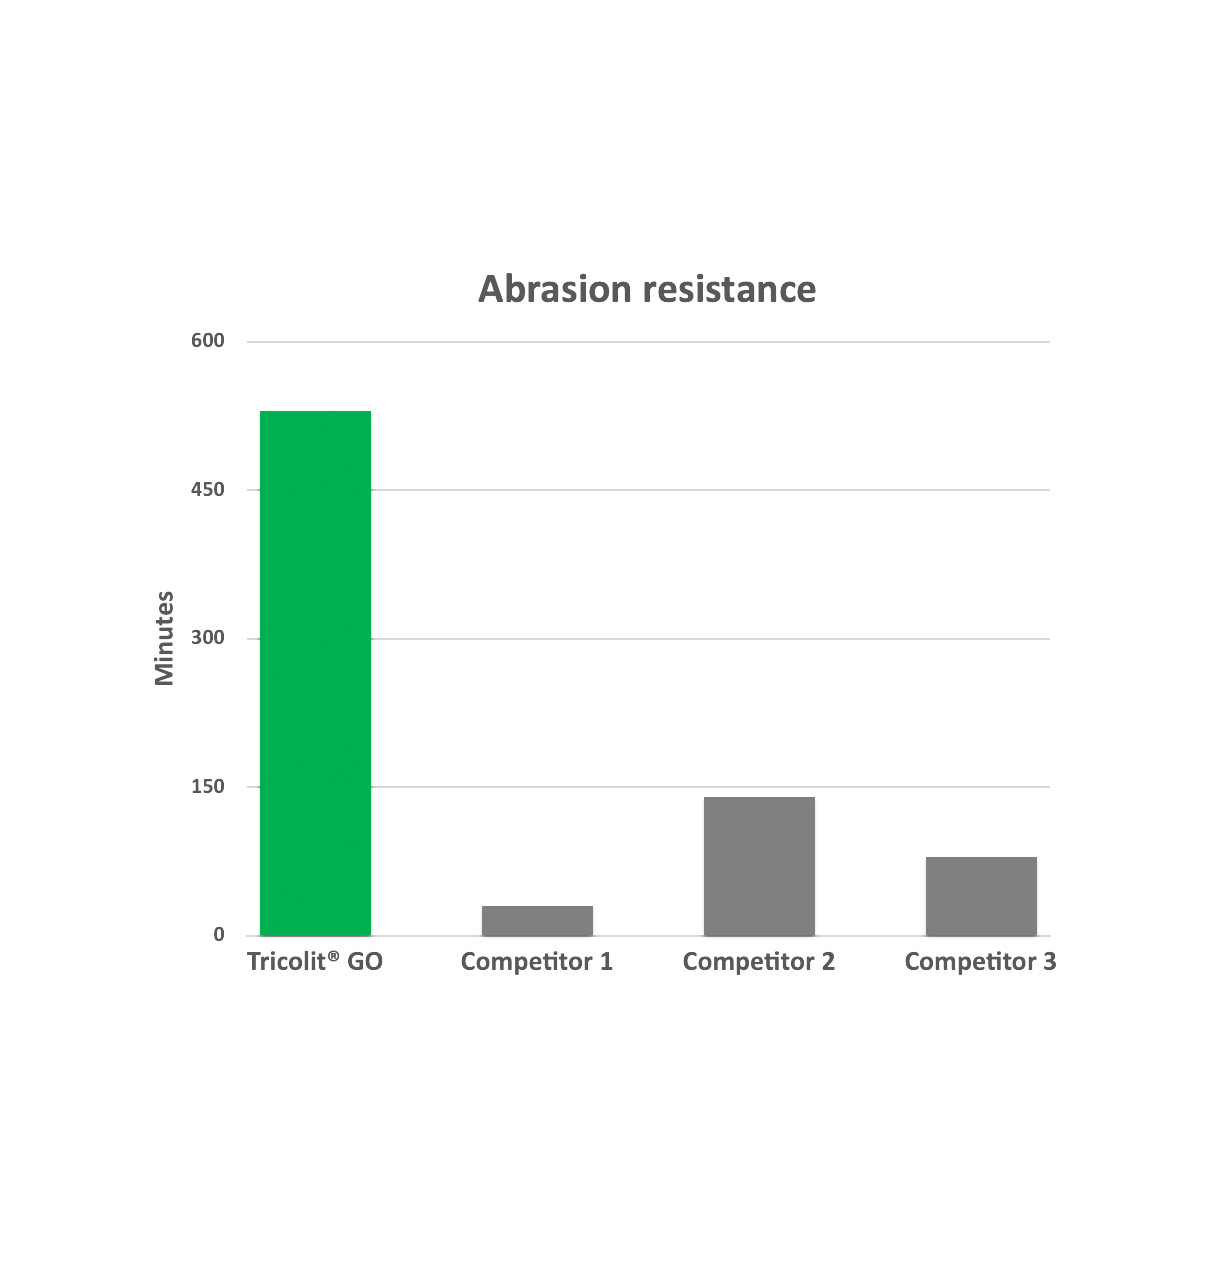 Tribonex Abrasion resistance